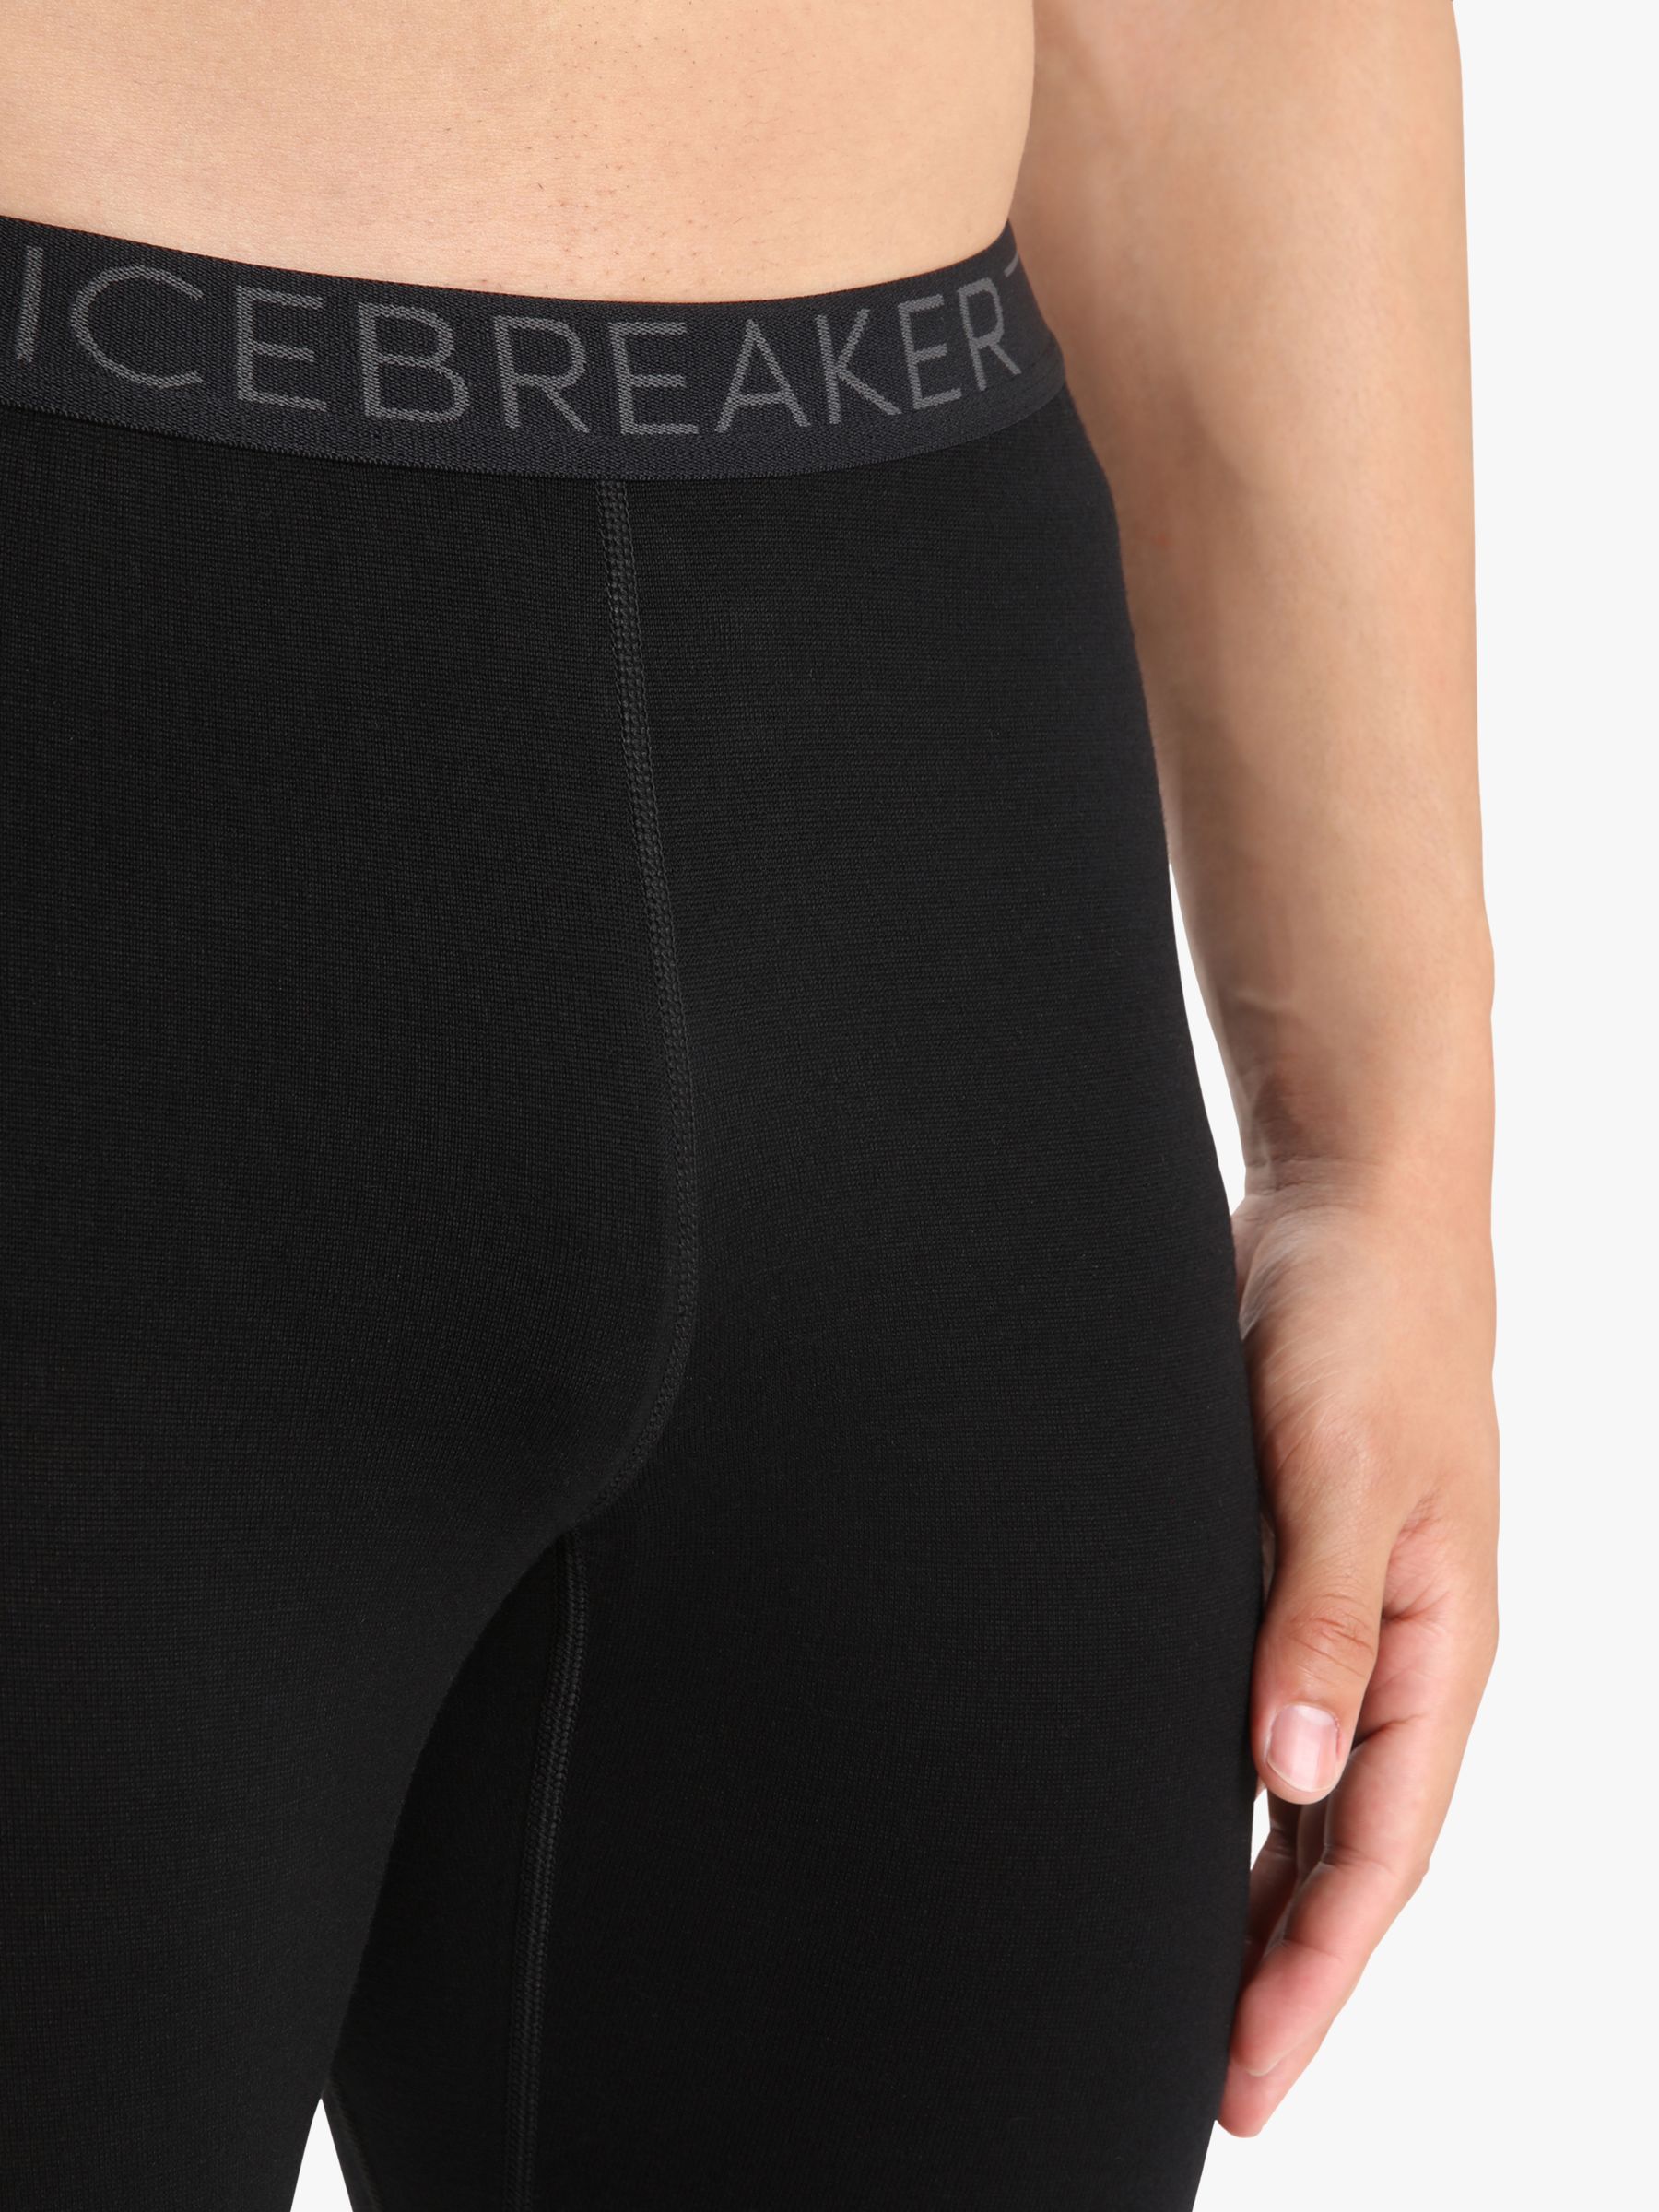 Buy Icebreaker Men's 260 Tech Merino Thermal Leggings, Black Online at johnlewis.com